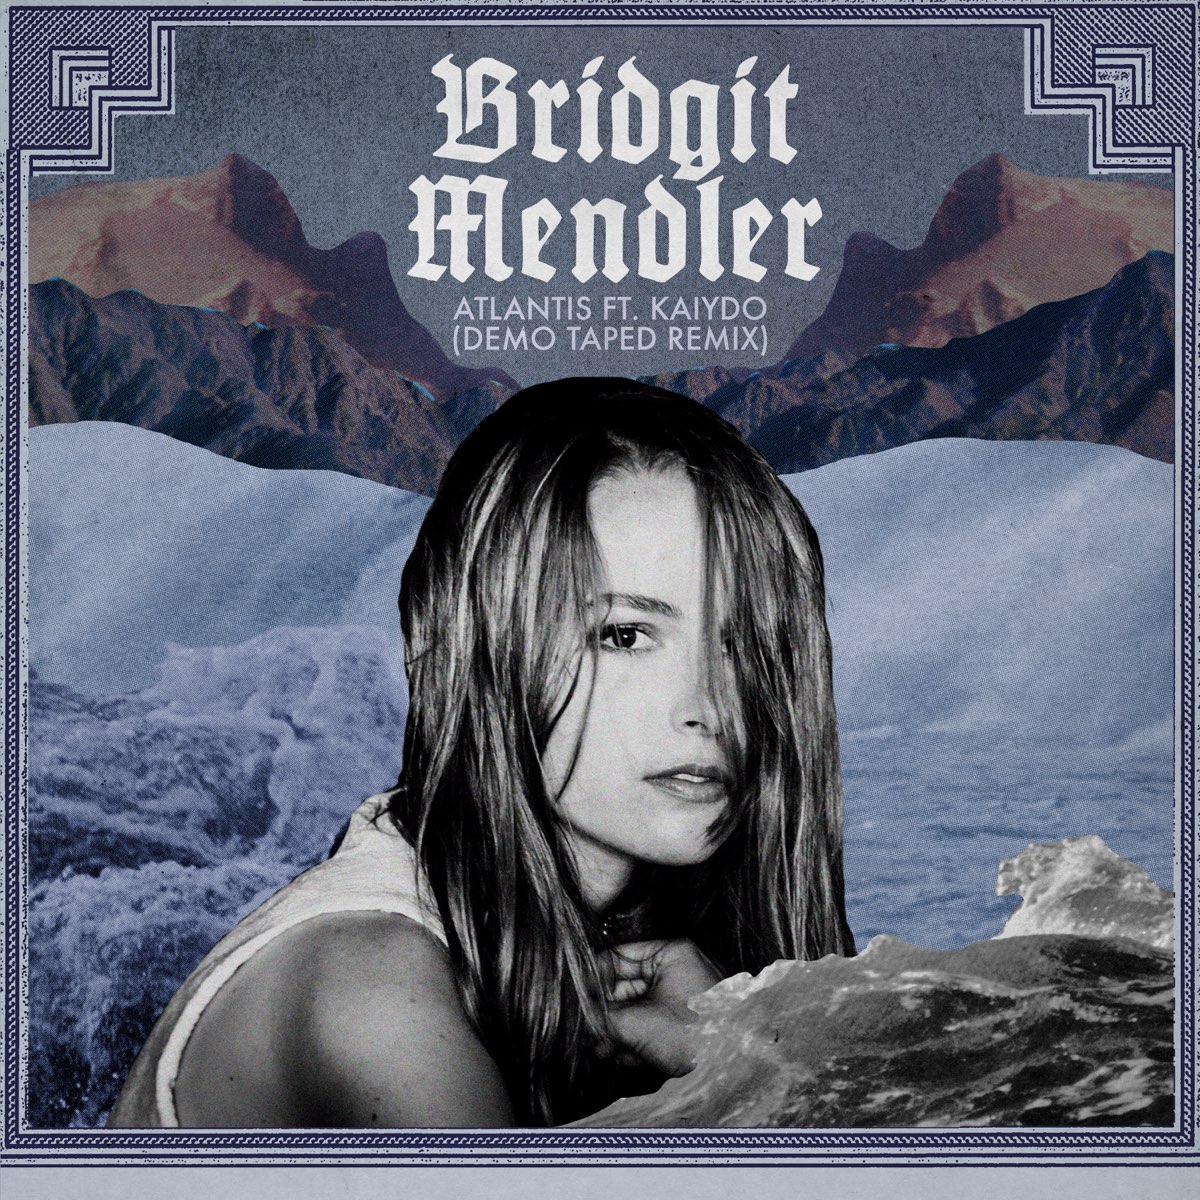 Bridgit Mendler Atlantis. Kaiydo. Demo Tape Cover. Demo remix